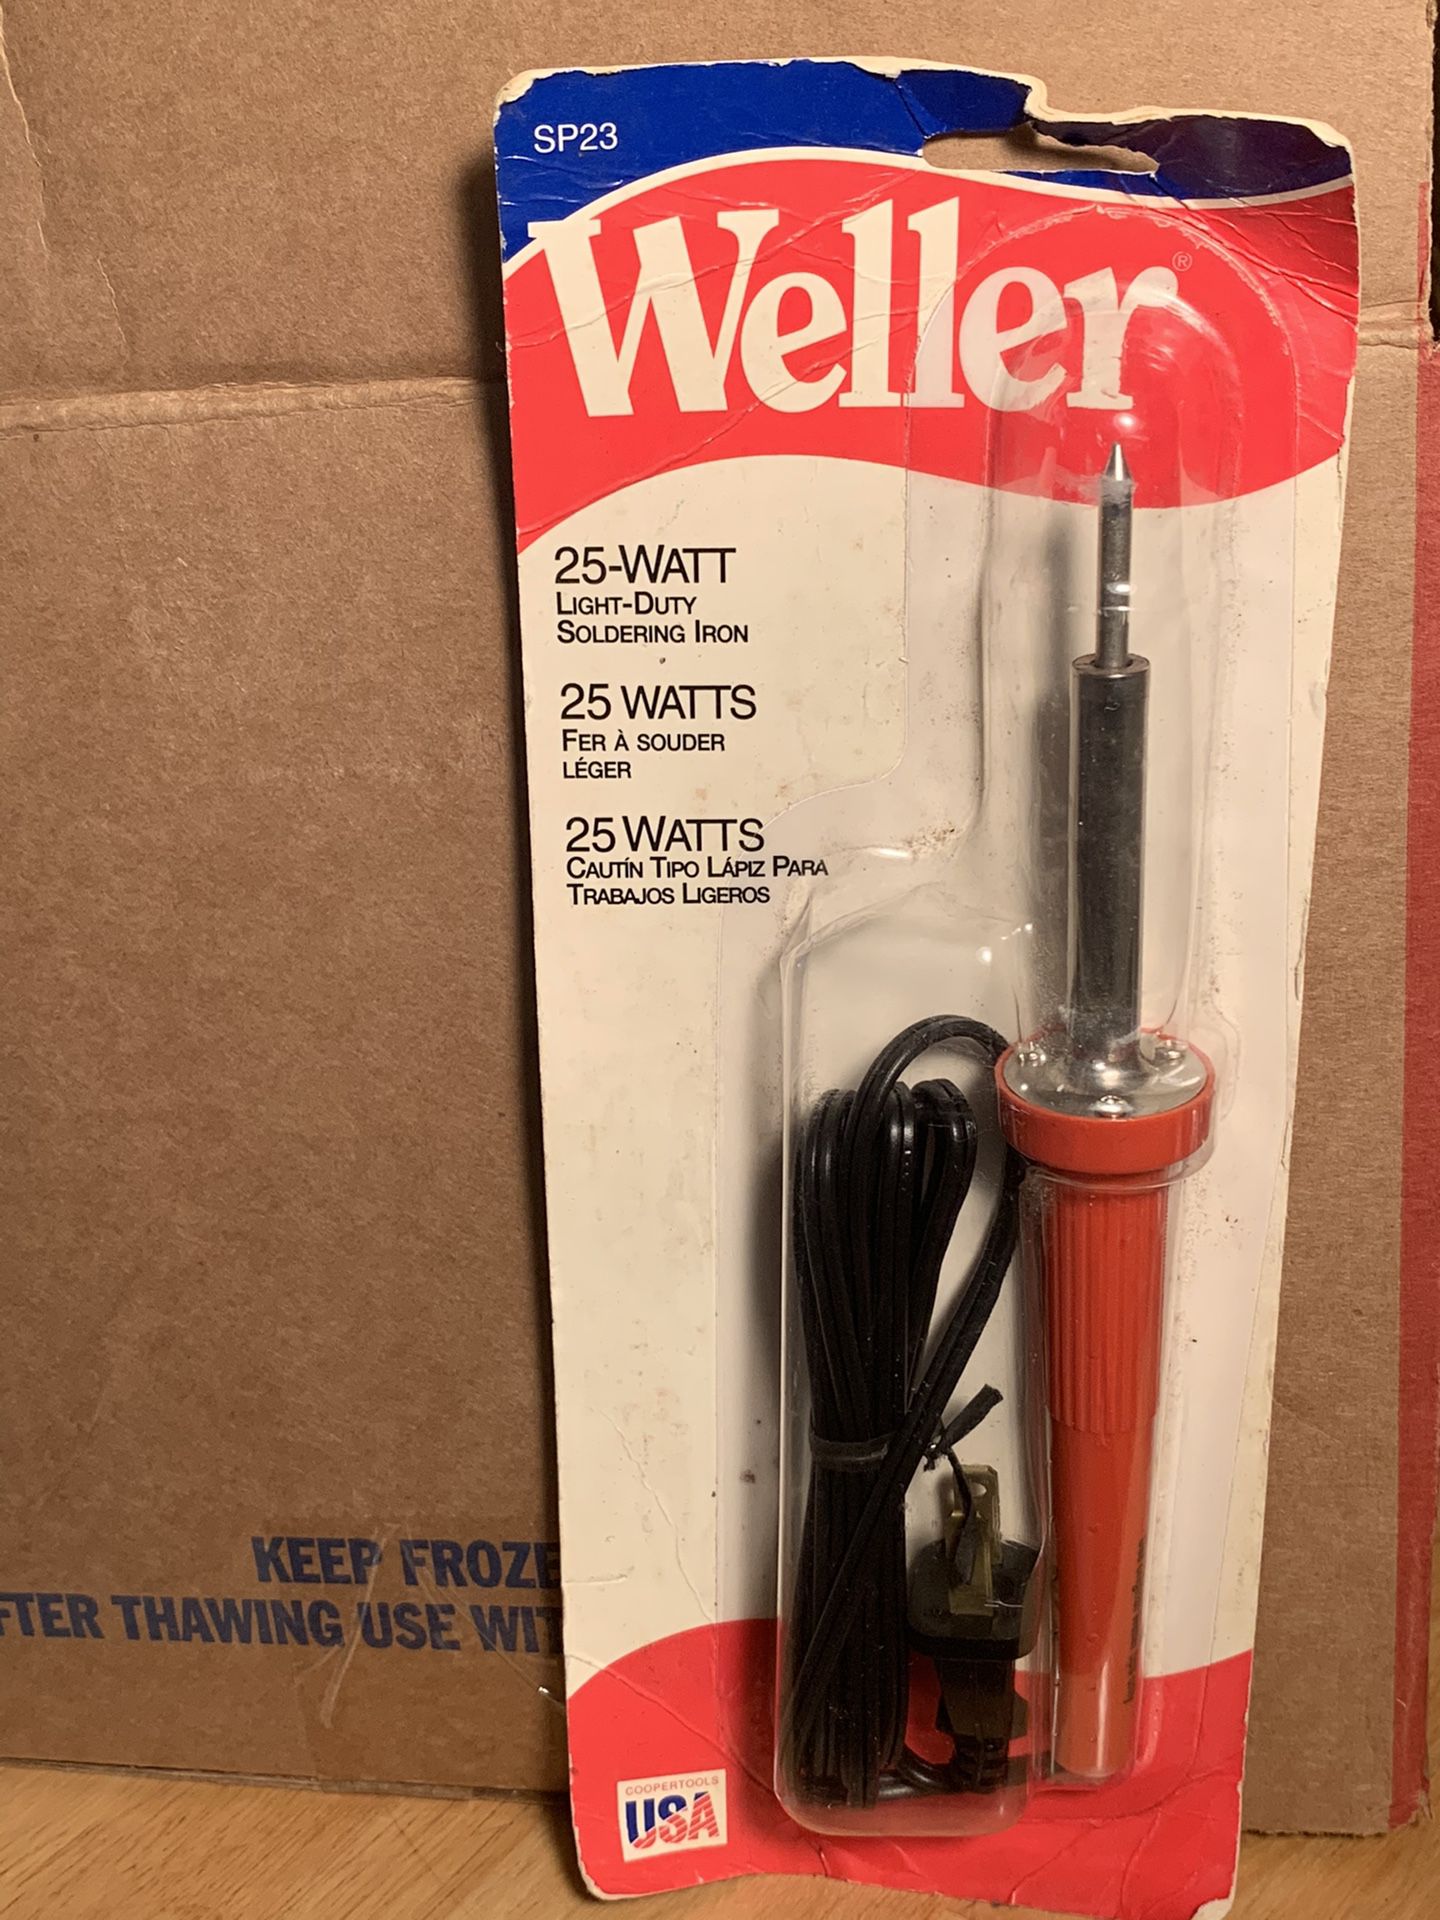 Weller sp23 25-watt light-duty soldering iron